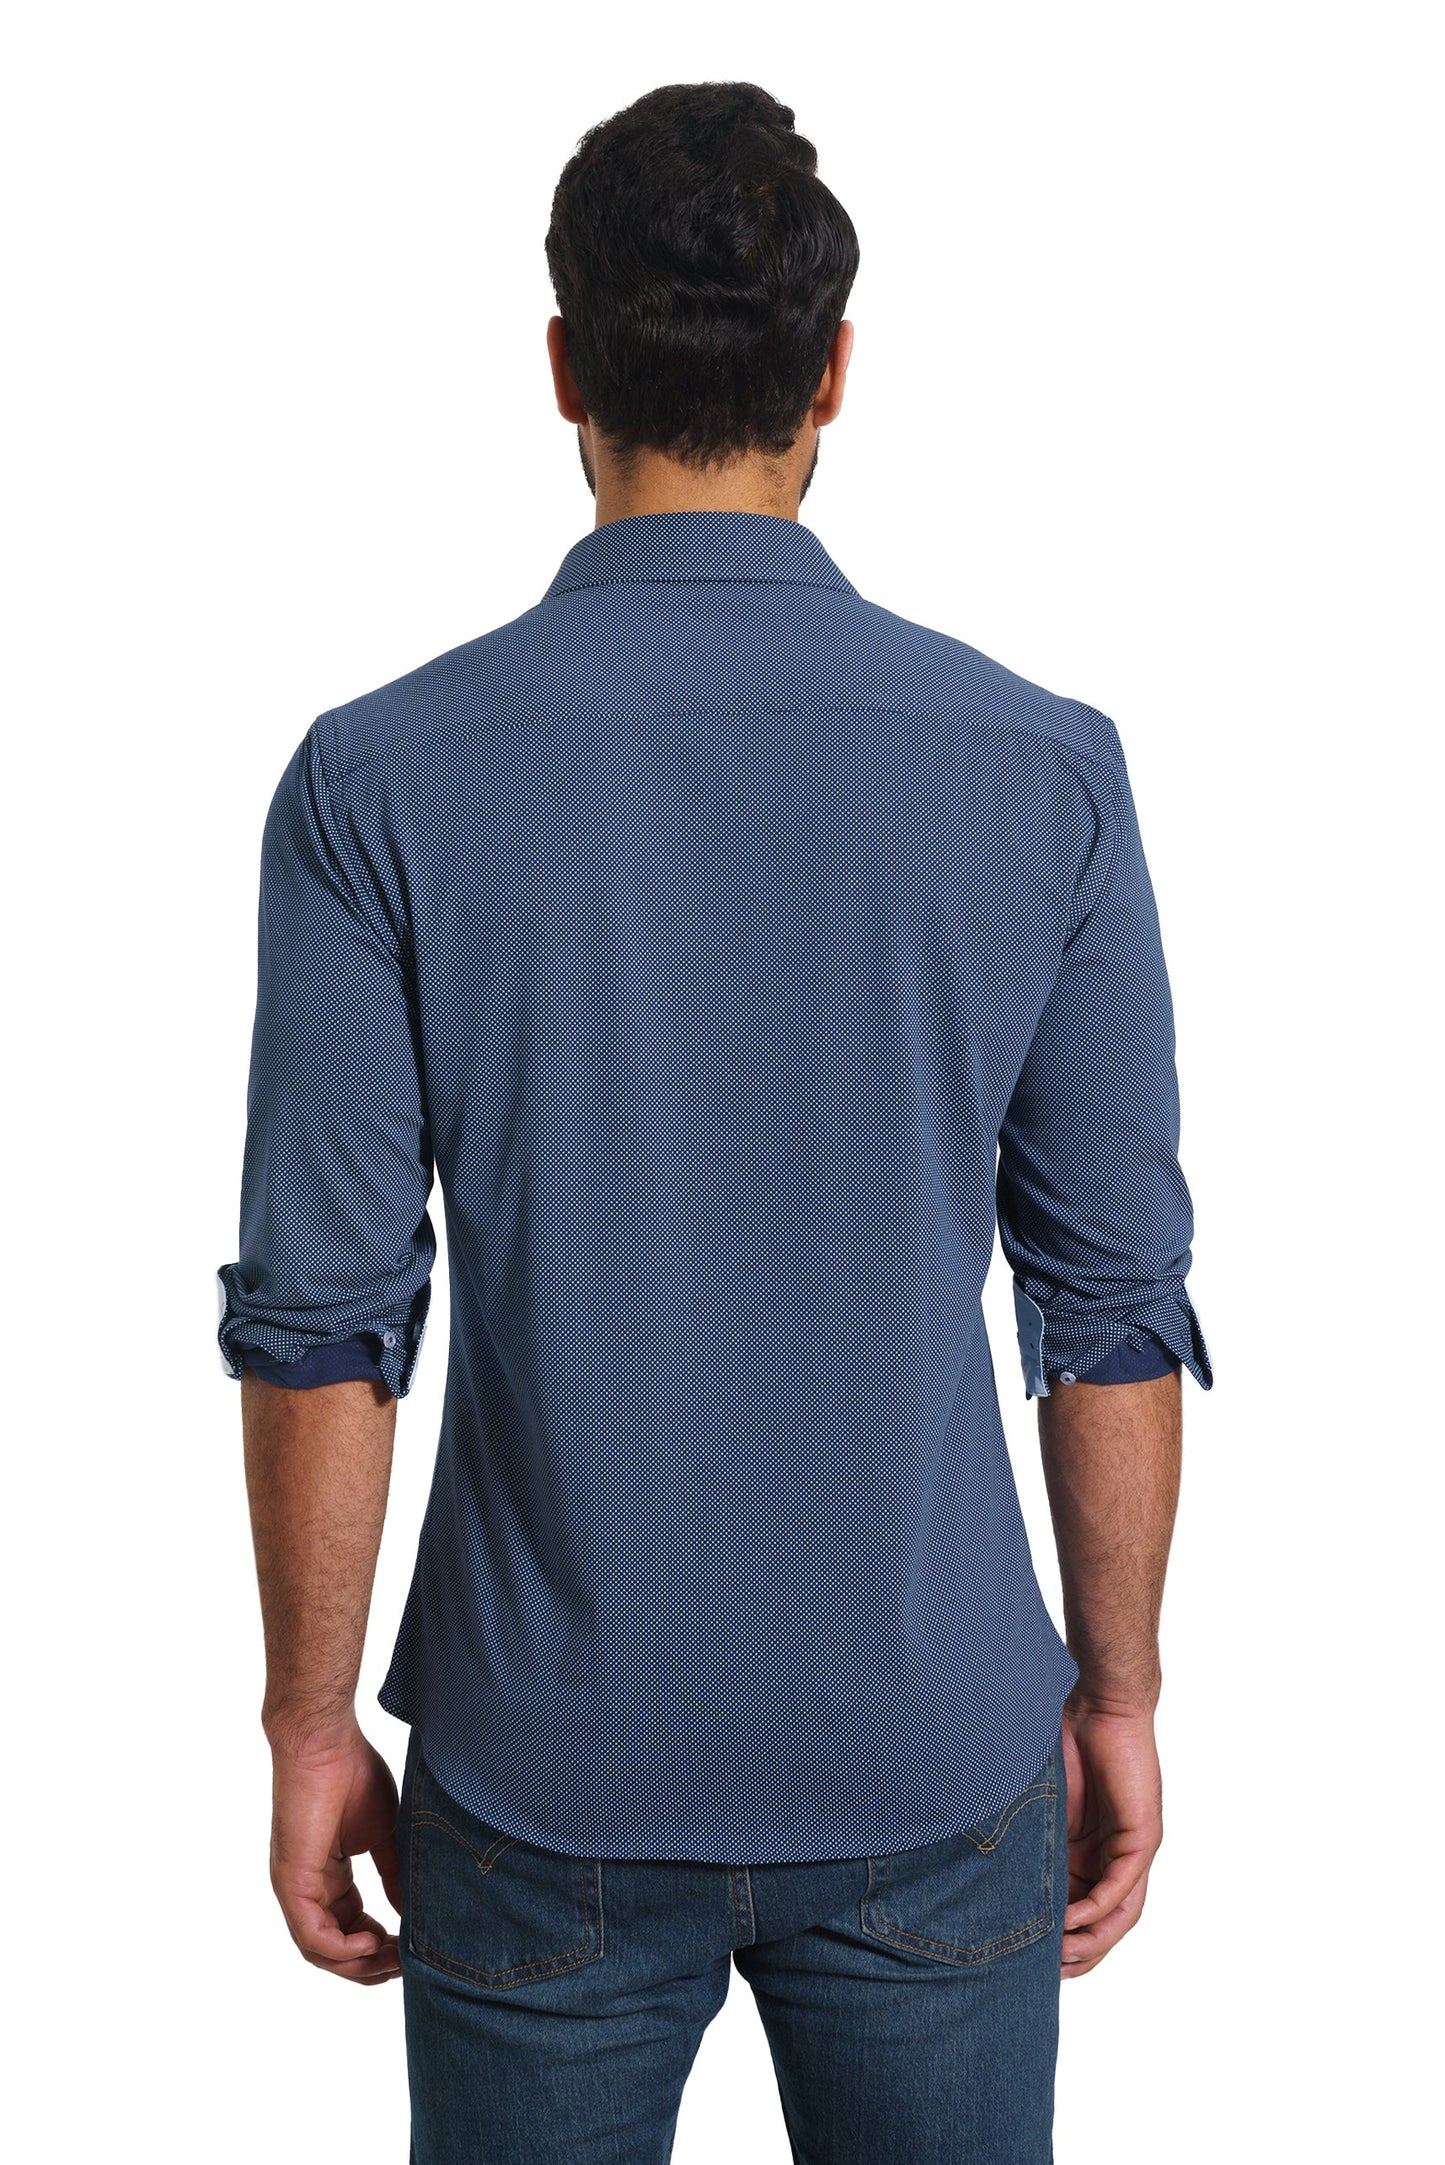 Blue Long Sleeve Shirt TH-2871 Back